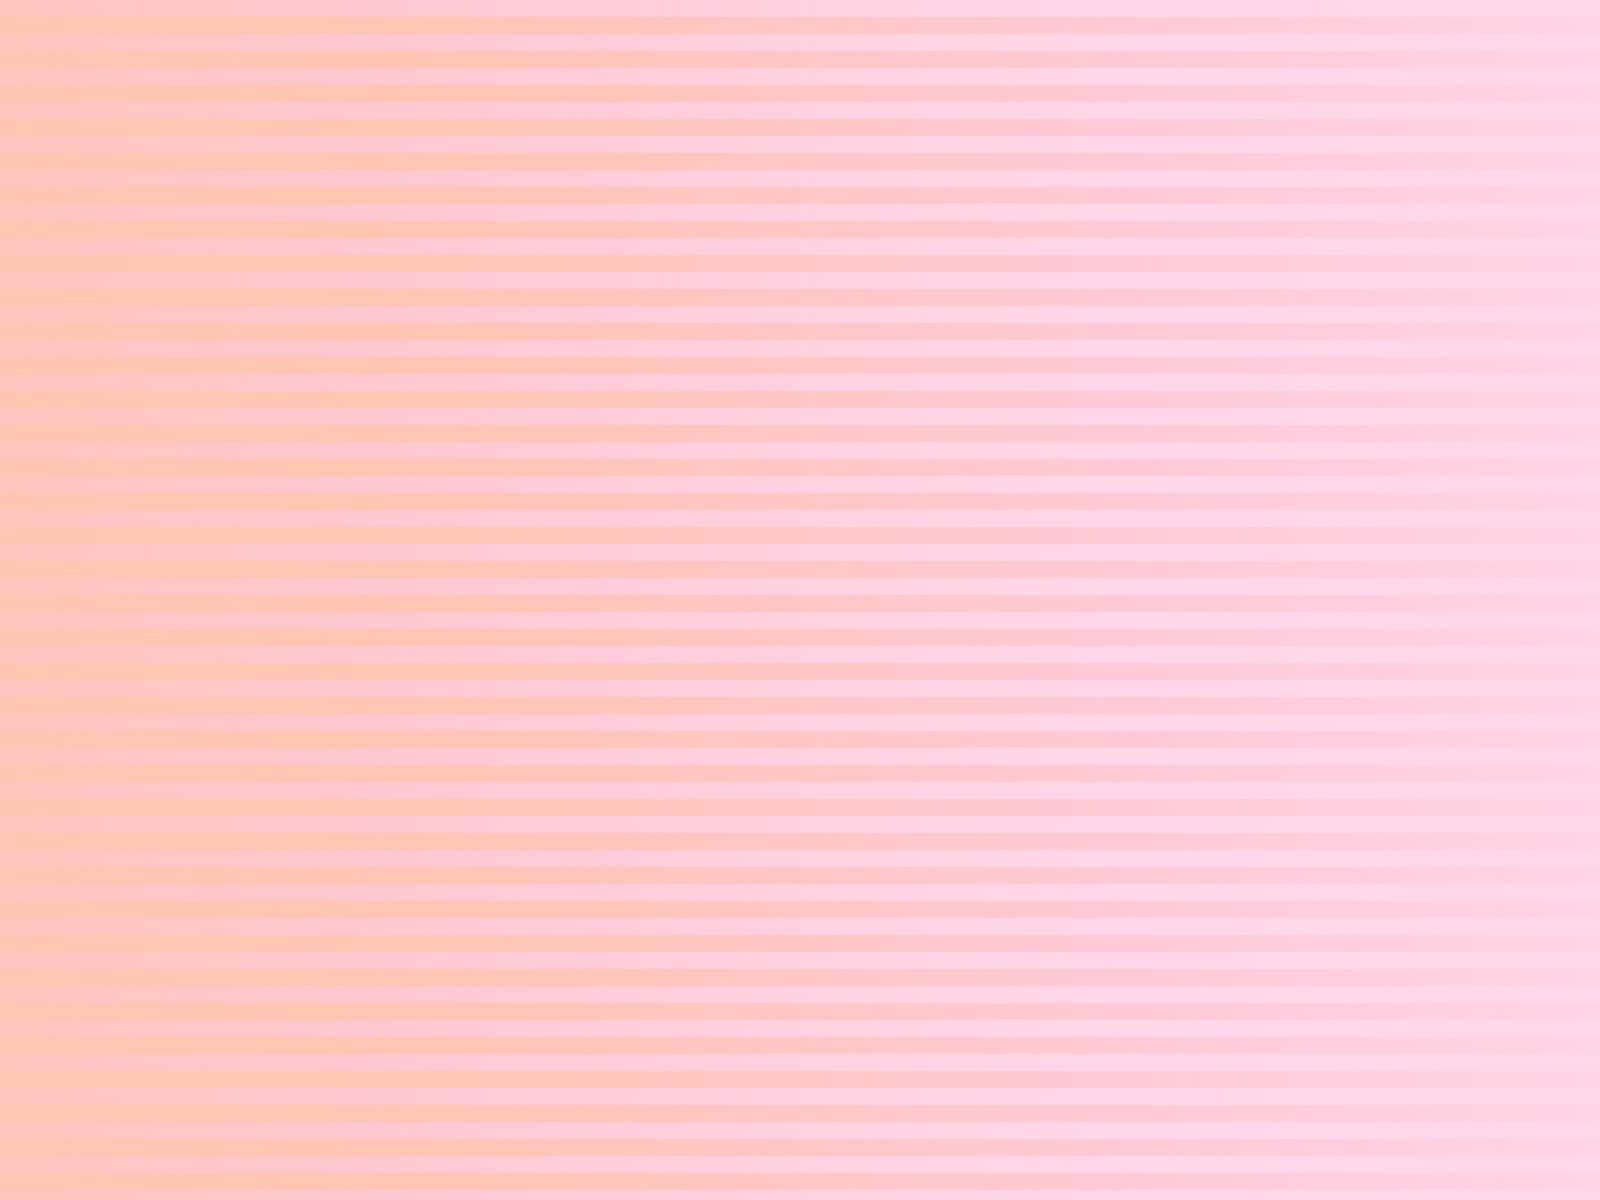 A simple and elegant plain pink desktop Wallpaper